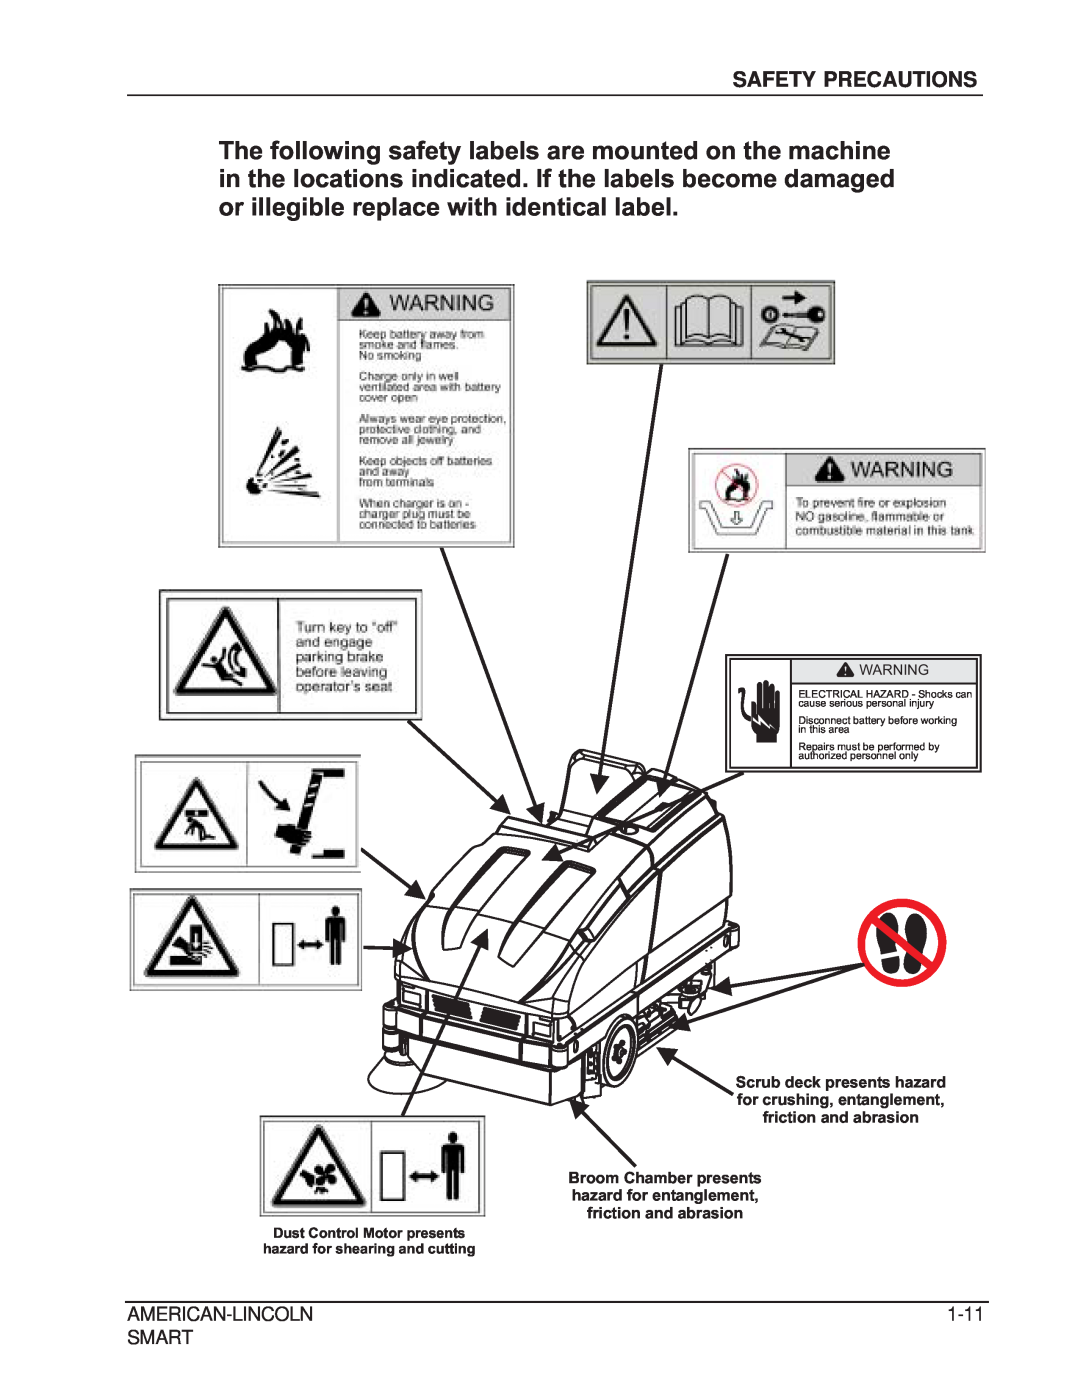 Nilfisk-ALTO 692003 manual Safety Precautions, American-Lincoln, 1-11, Smart 